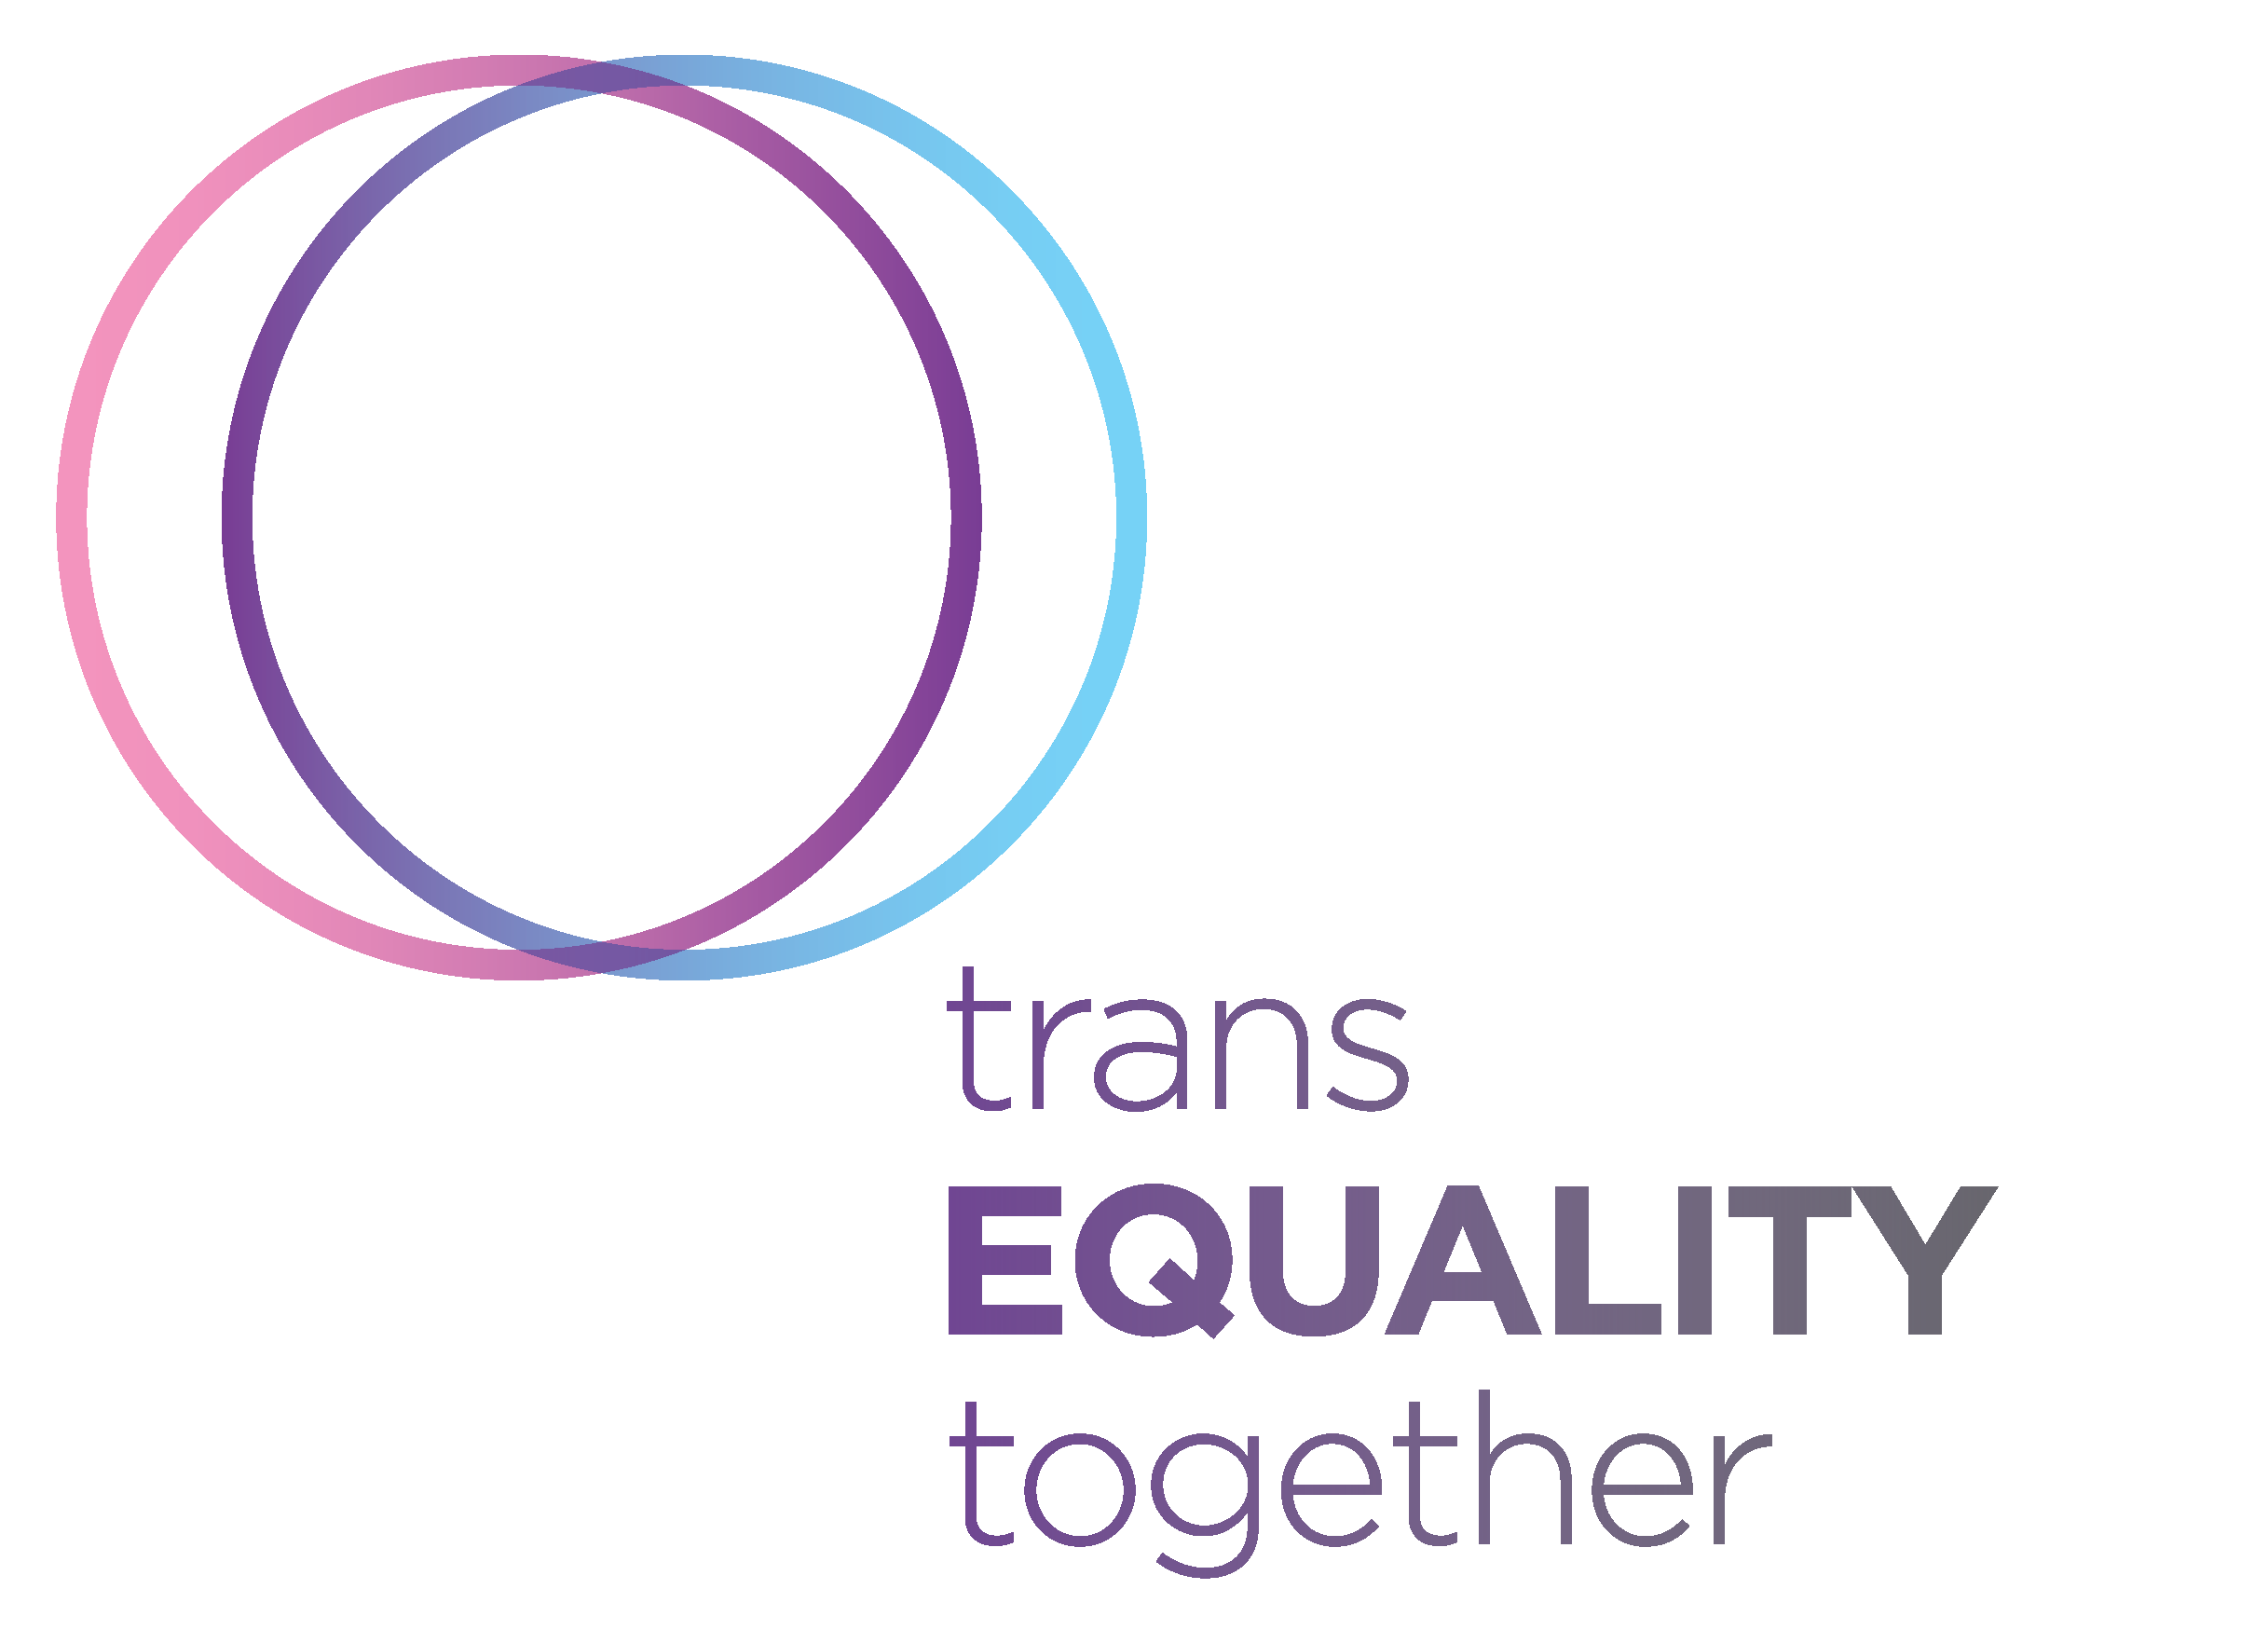 Trans Equality Together